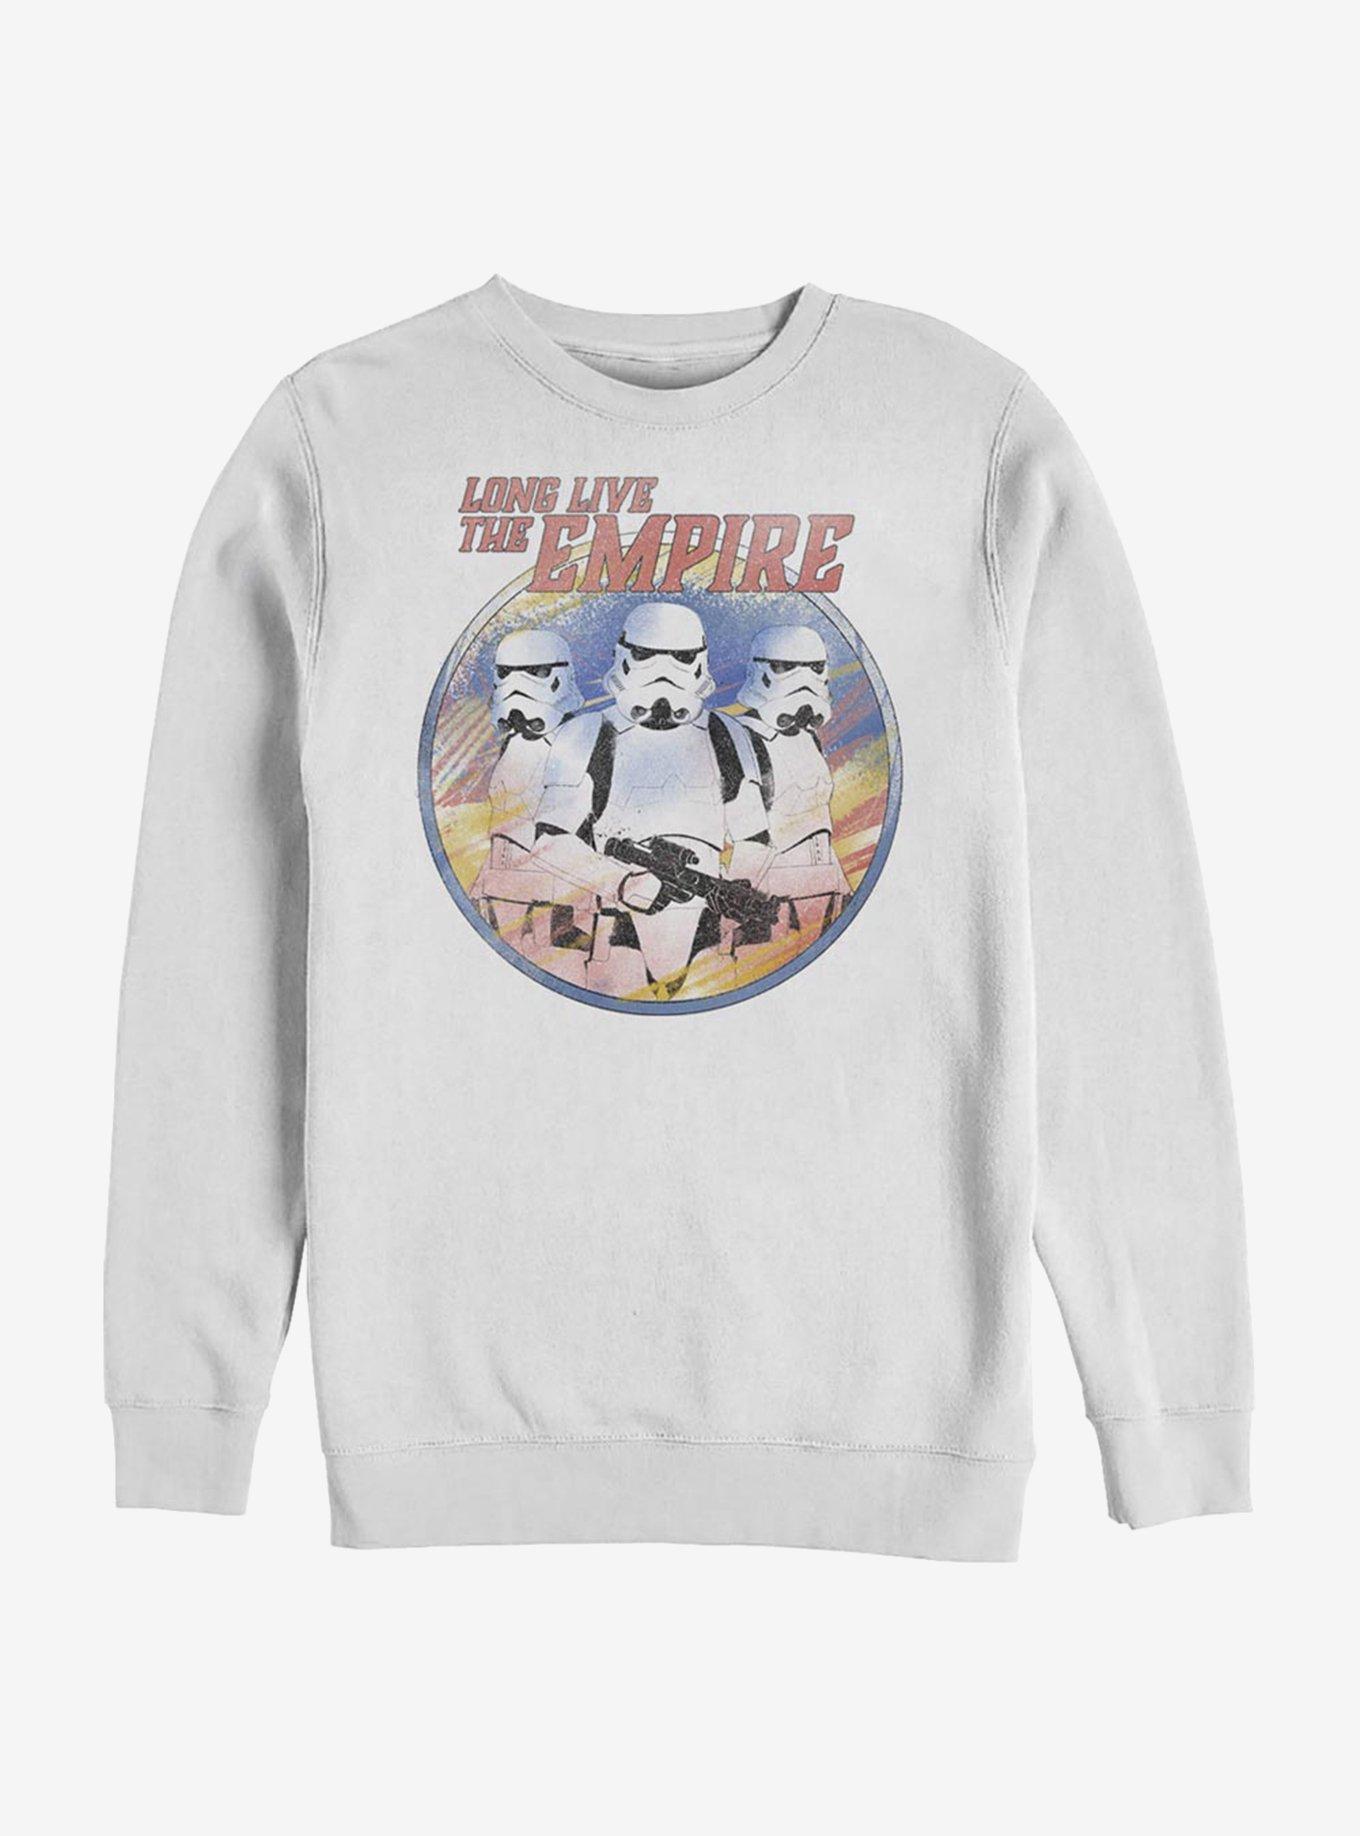 Star Wars The Mandalorian Long Live Empire Crew Sweatshirt